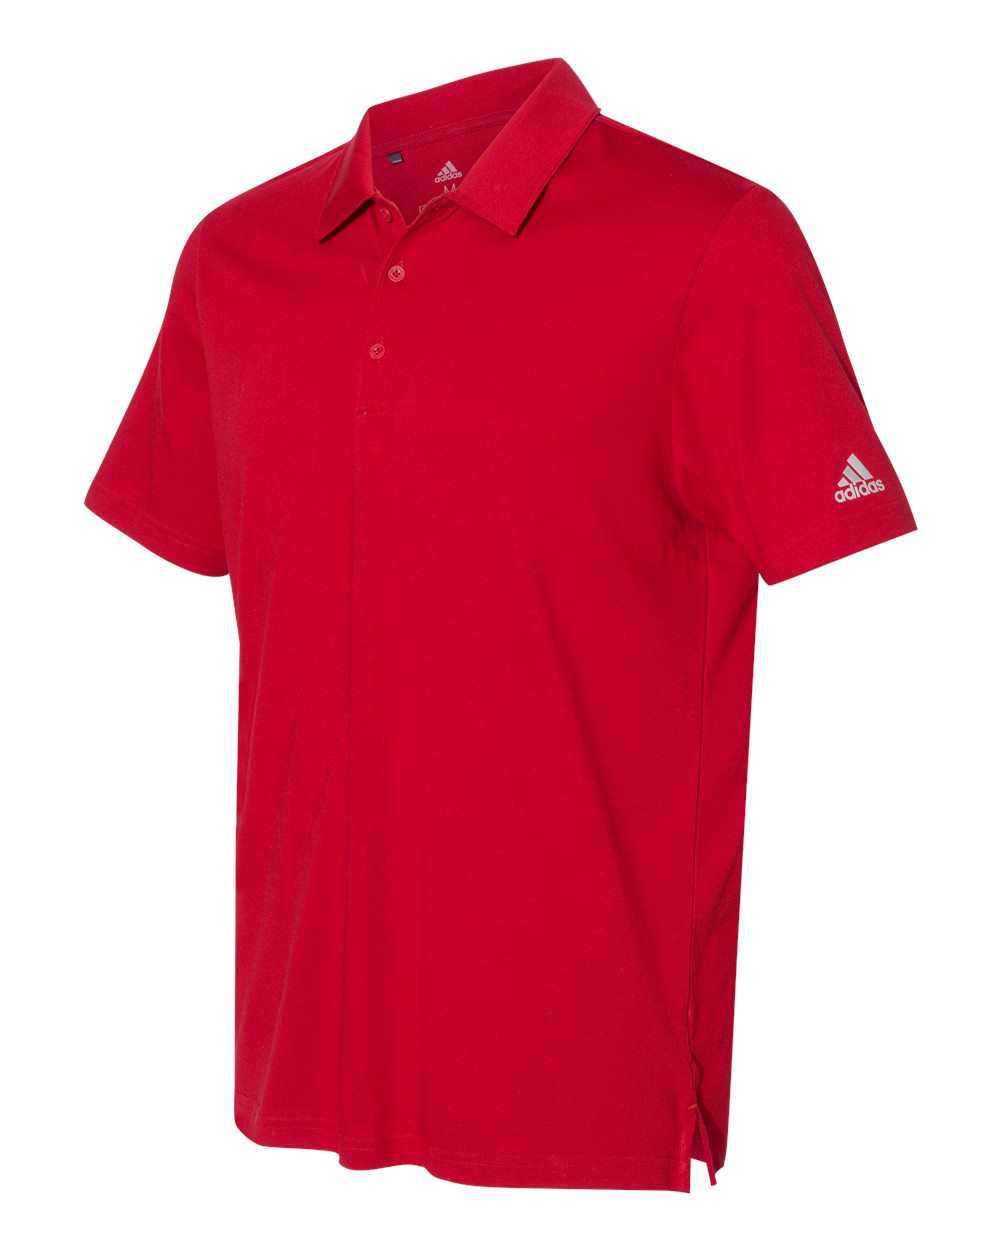 Adidas A322 Cotton Blend Sport Shirt - Power Red - HIT a Double